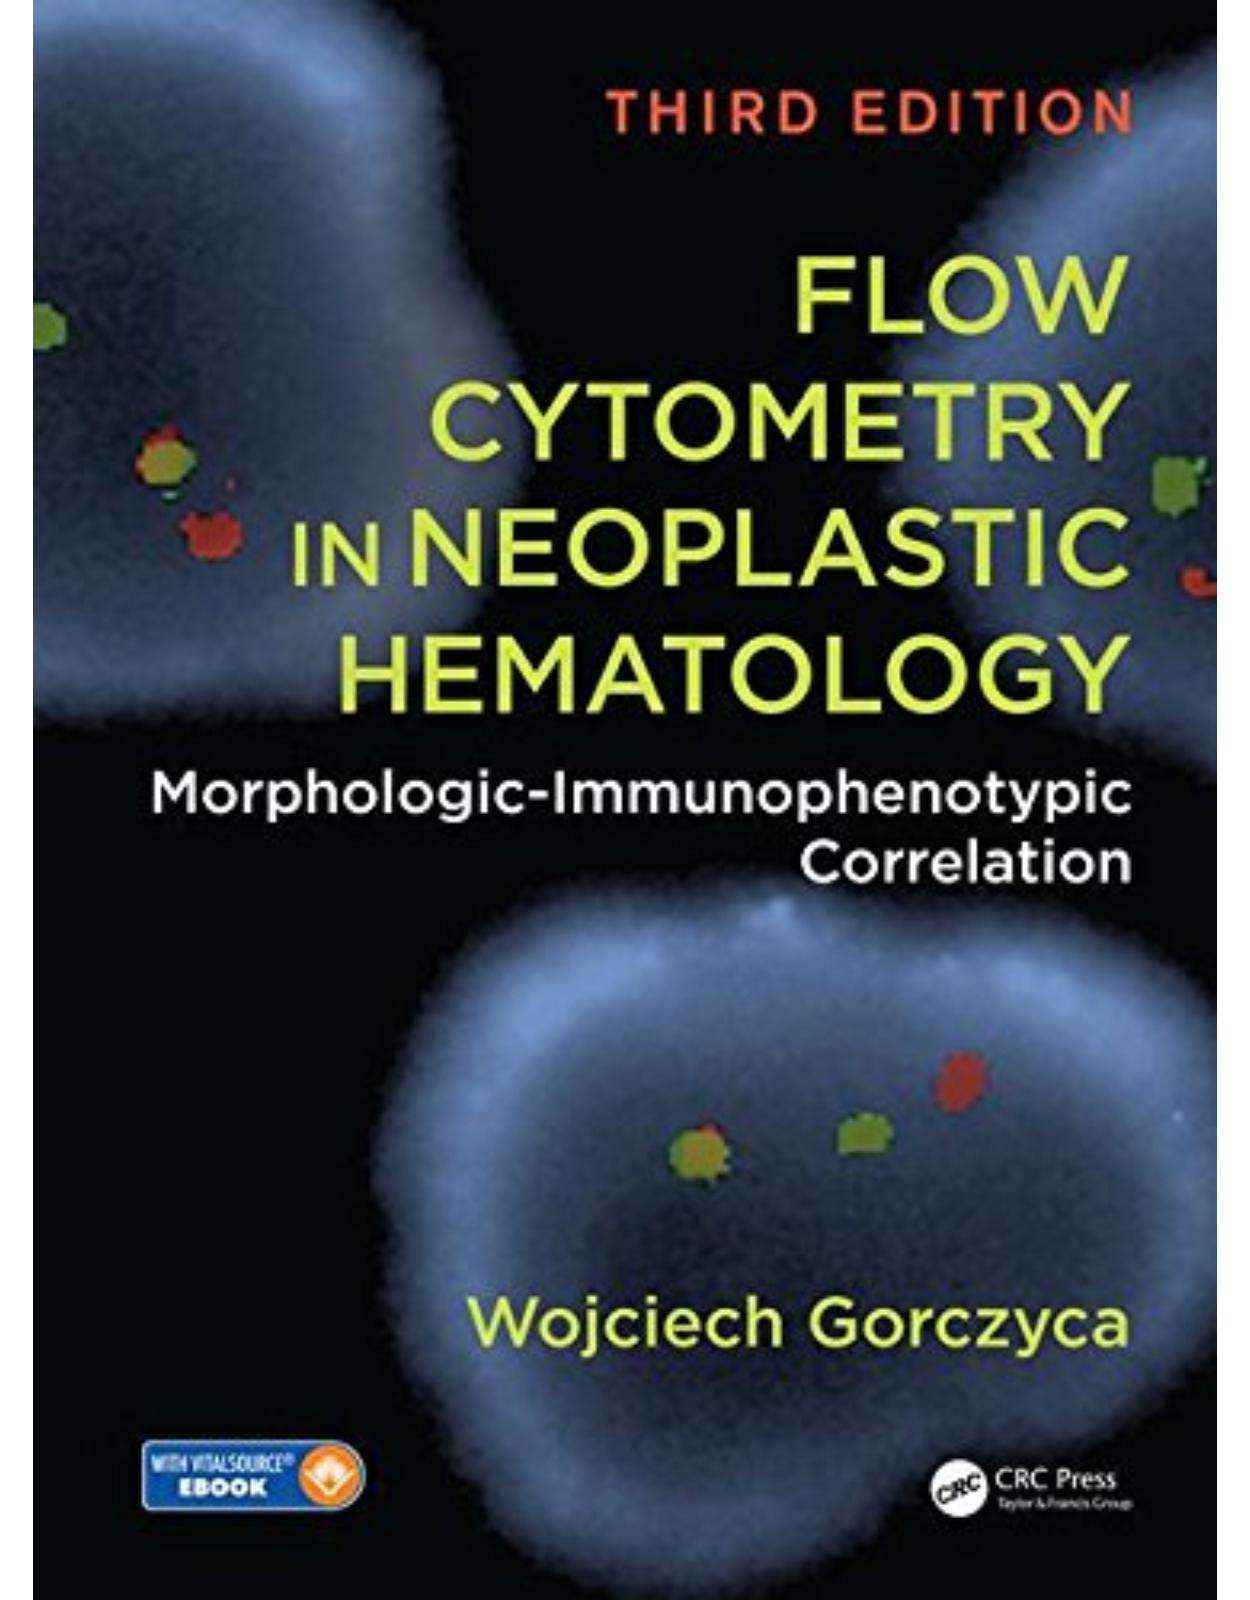 Flow Cytometry in Neoplastic Hematology: Morphologic-Immunophenotypic Correlation, Third Edition